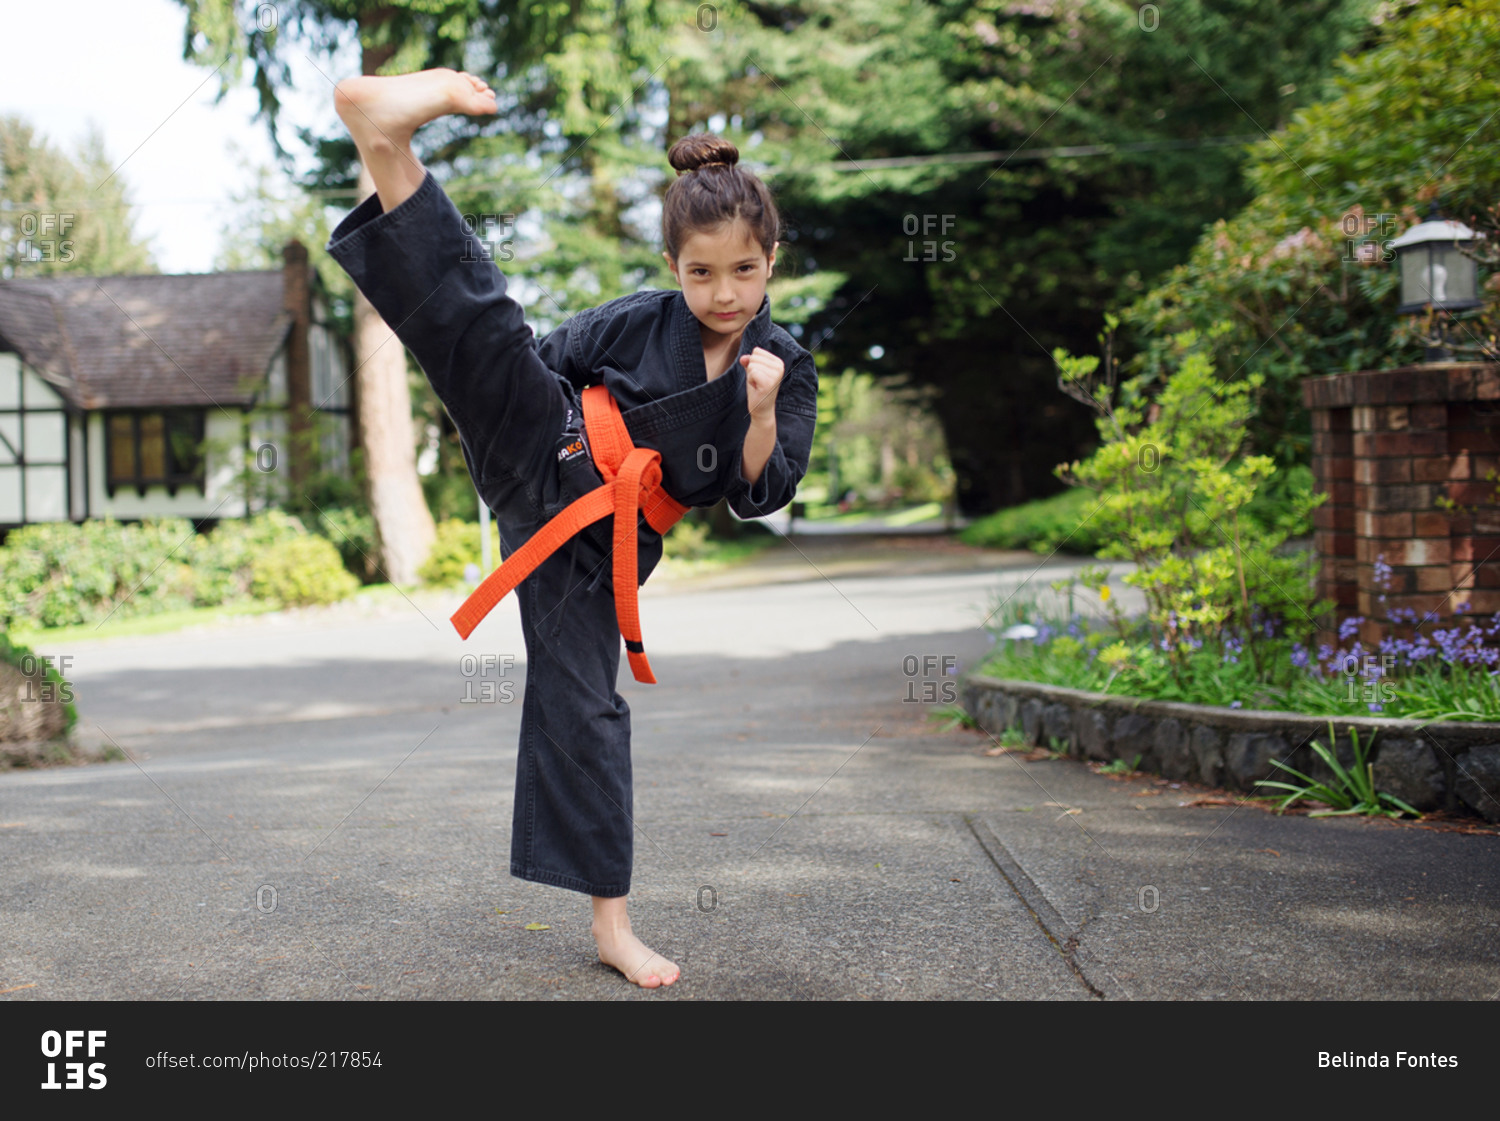 A girl wearing an orange belt practices a karate kick